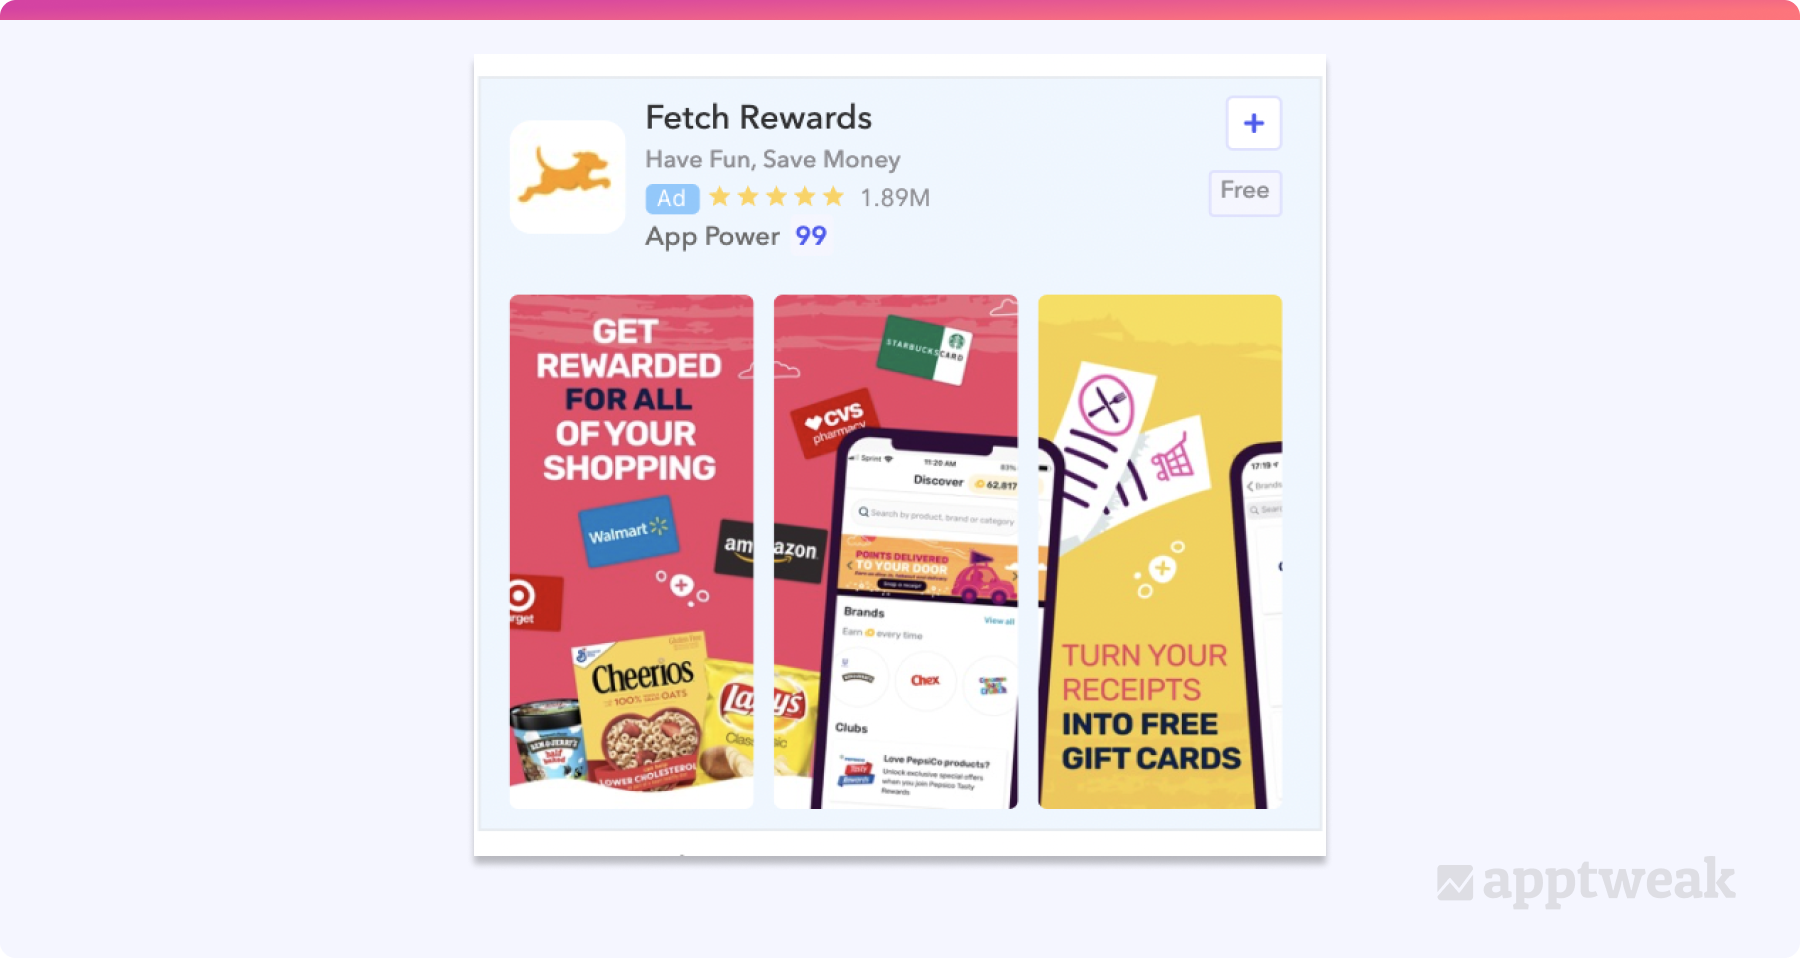 Apple Search Ad being run by Fetch Rewards